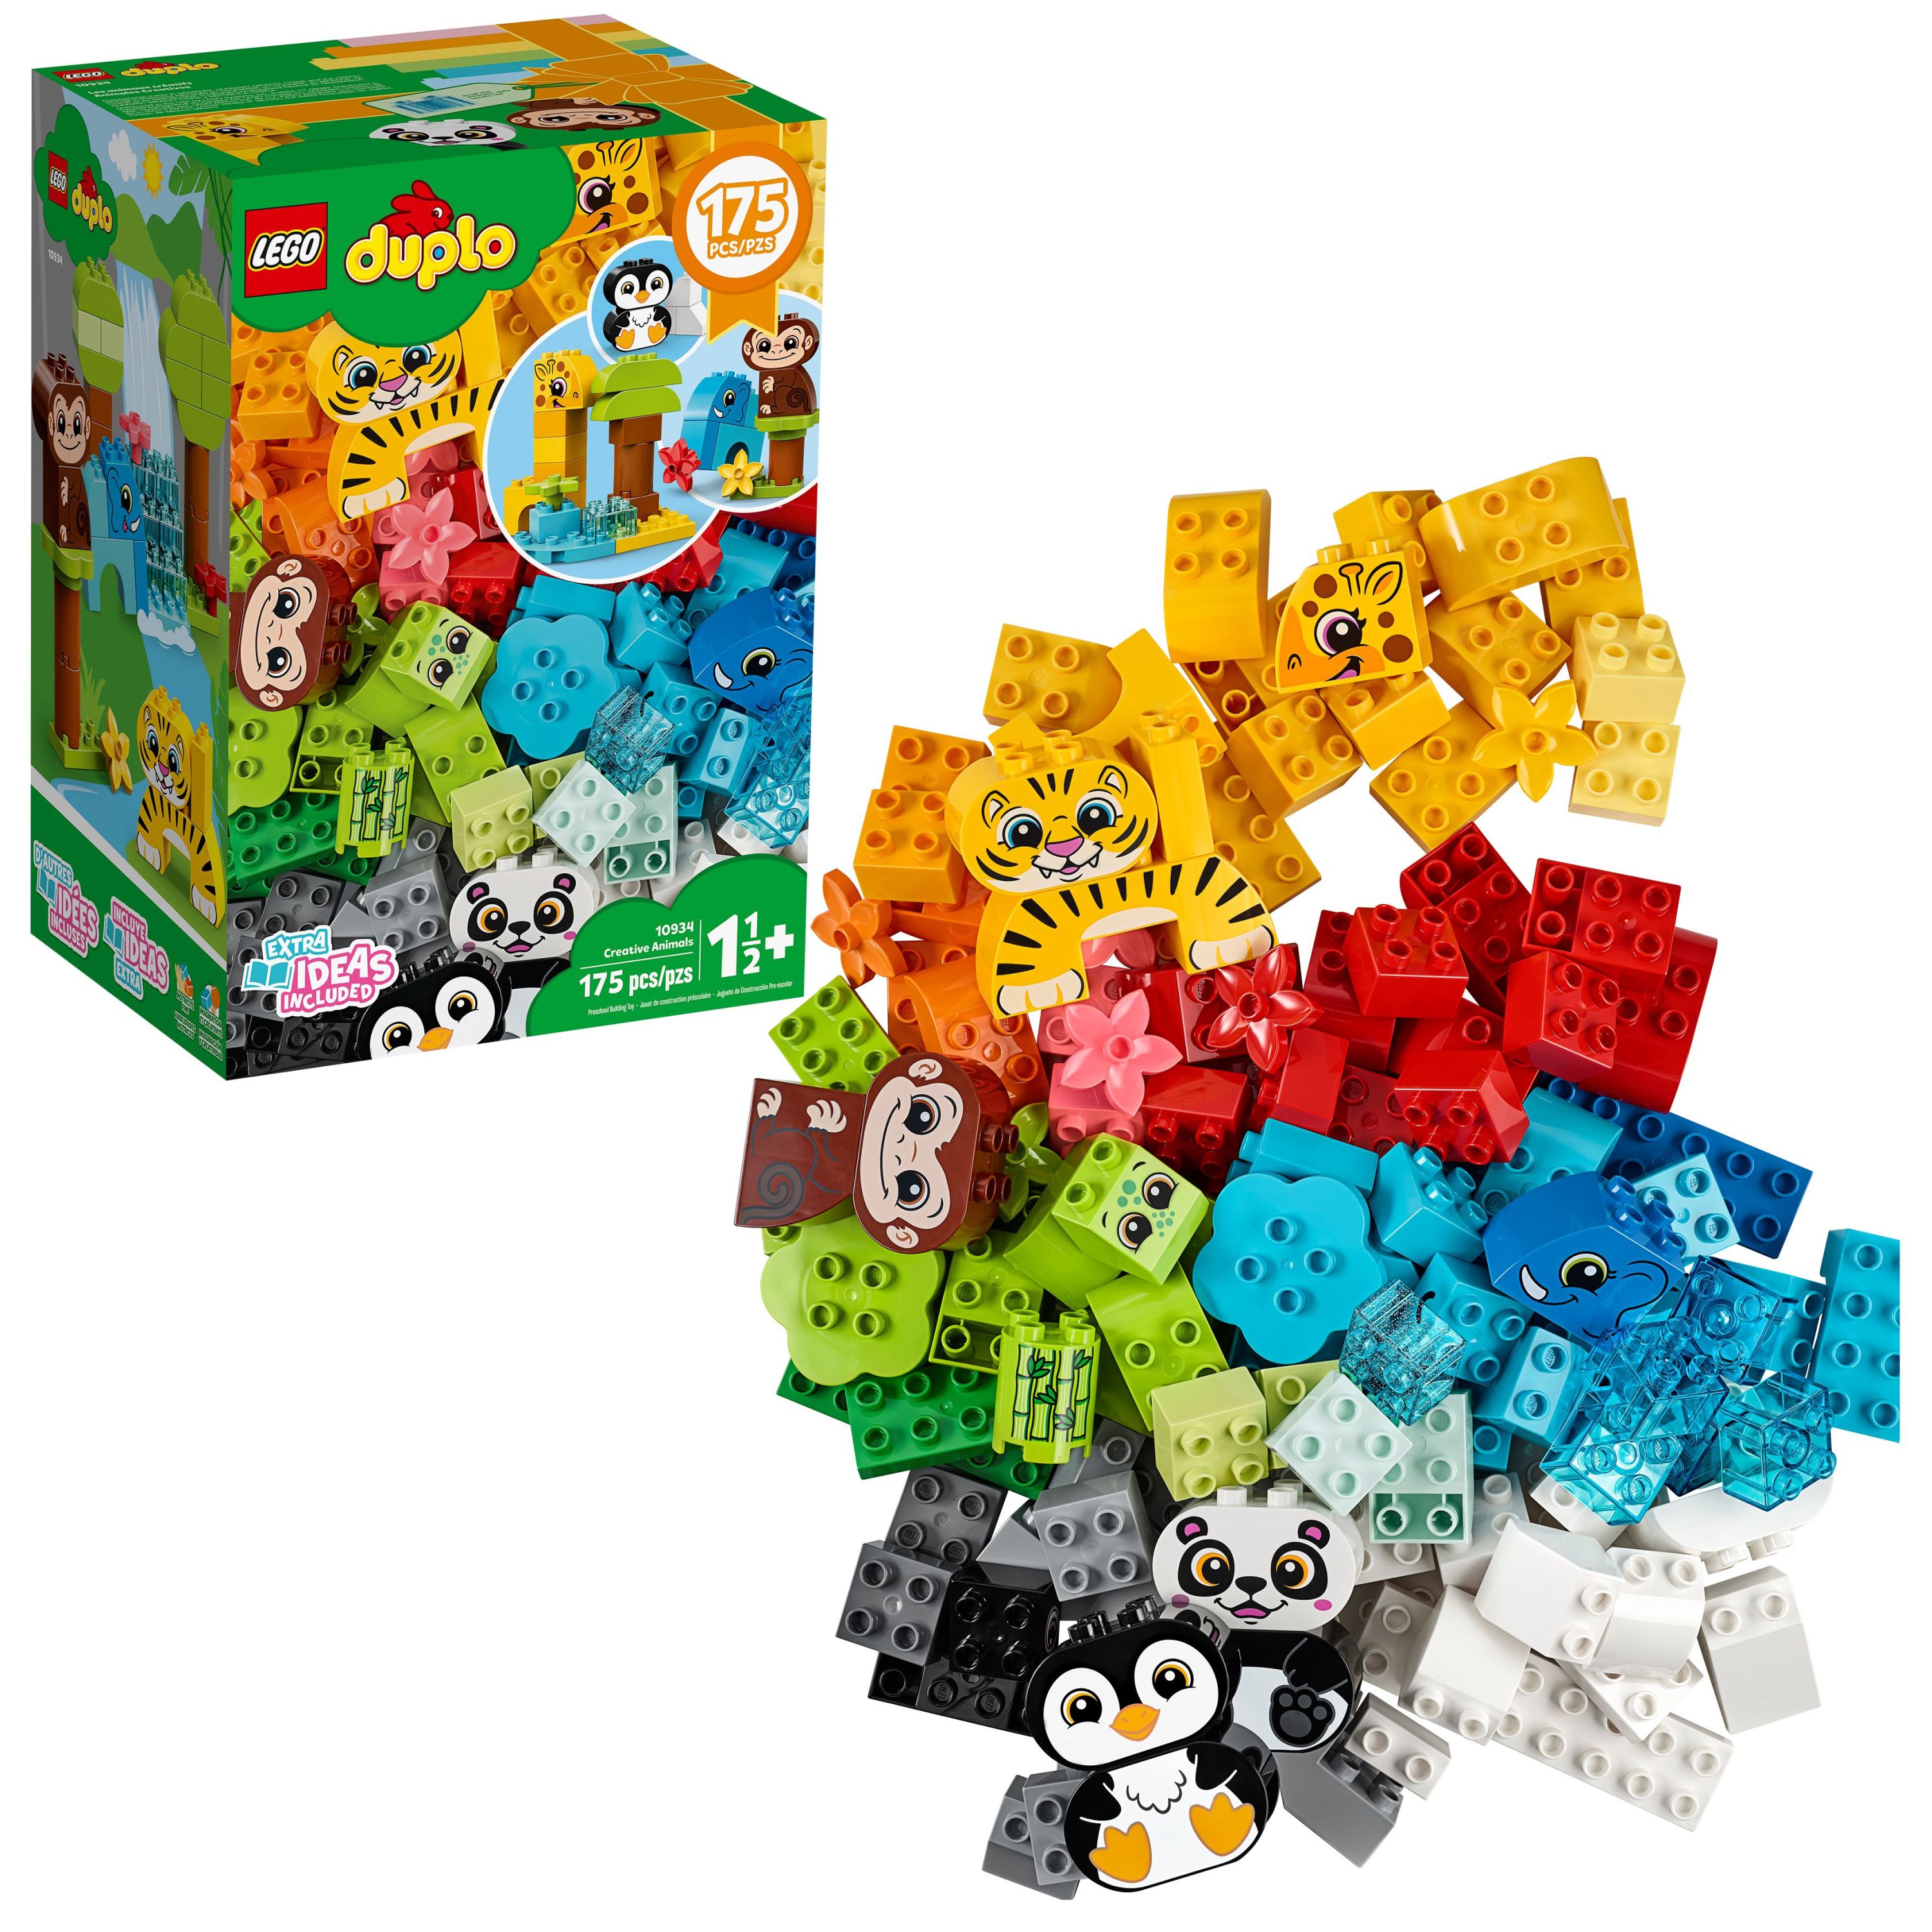 LEGO DUPLO Classic Creative Animals 10934 Building Toy Set (175 Pieces) - image 1 of 7